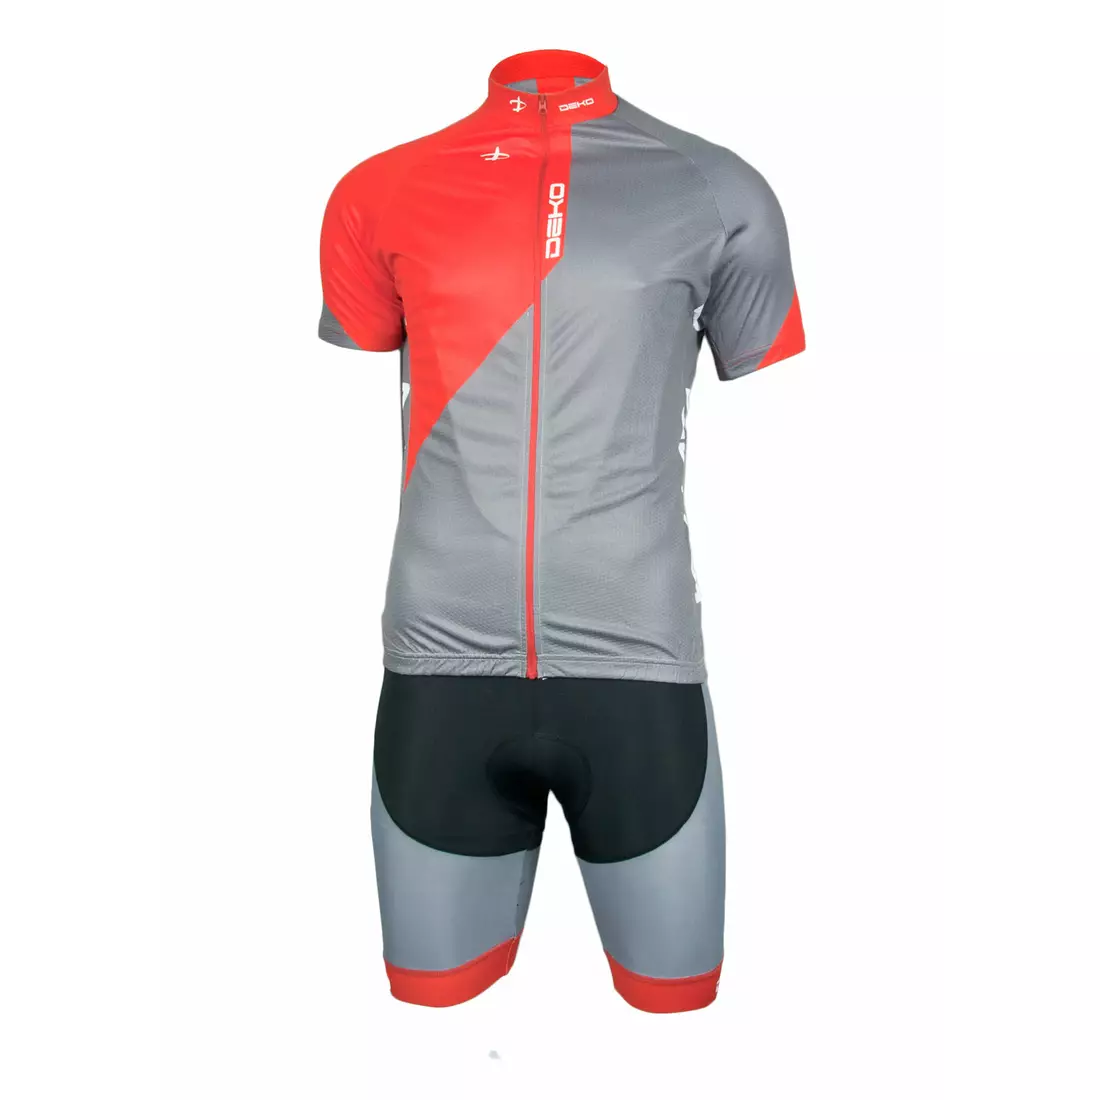 DEKO CHARCOAL - men's cycling set: shorts + jersey, black, gray and red